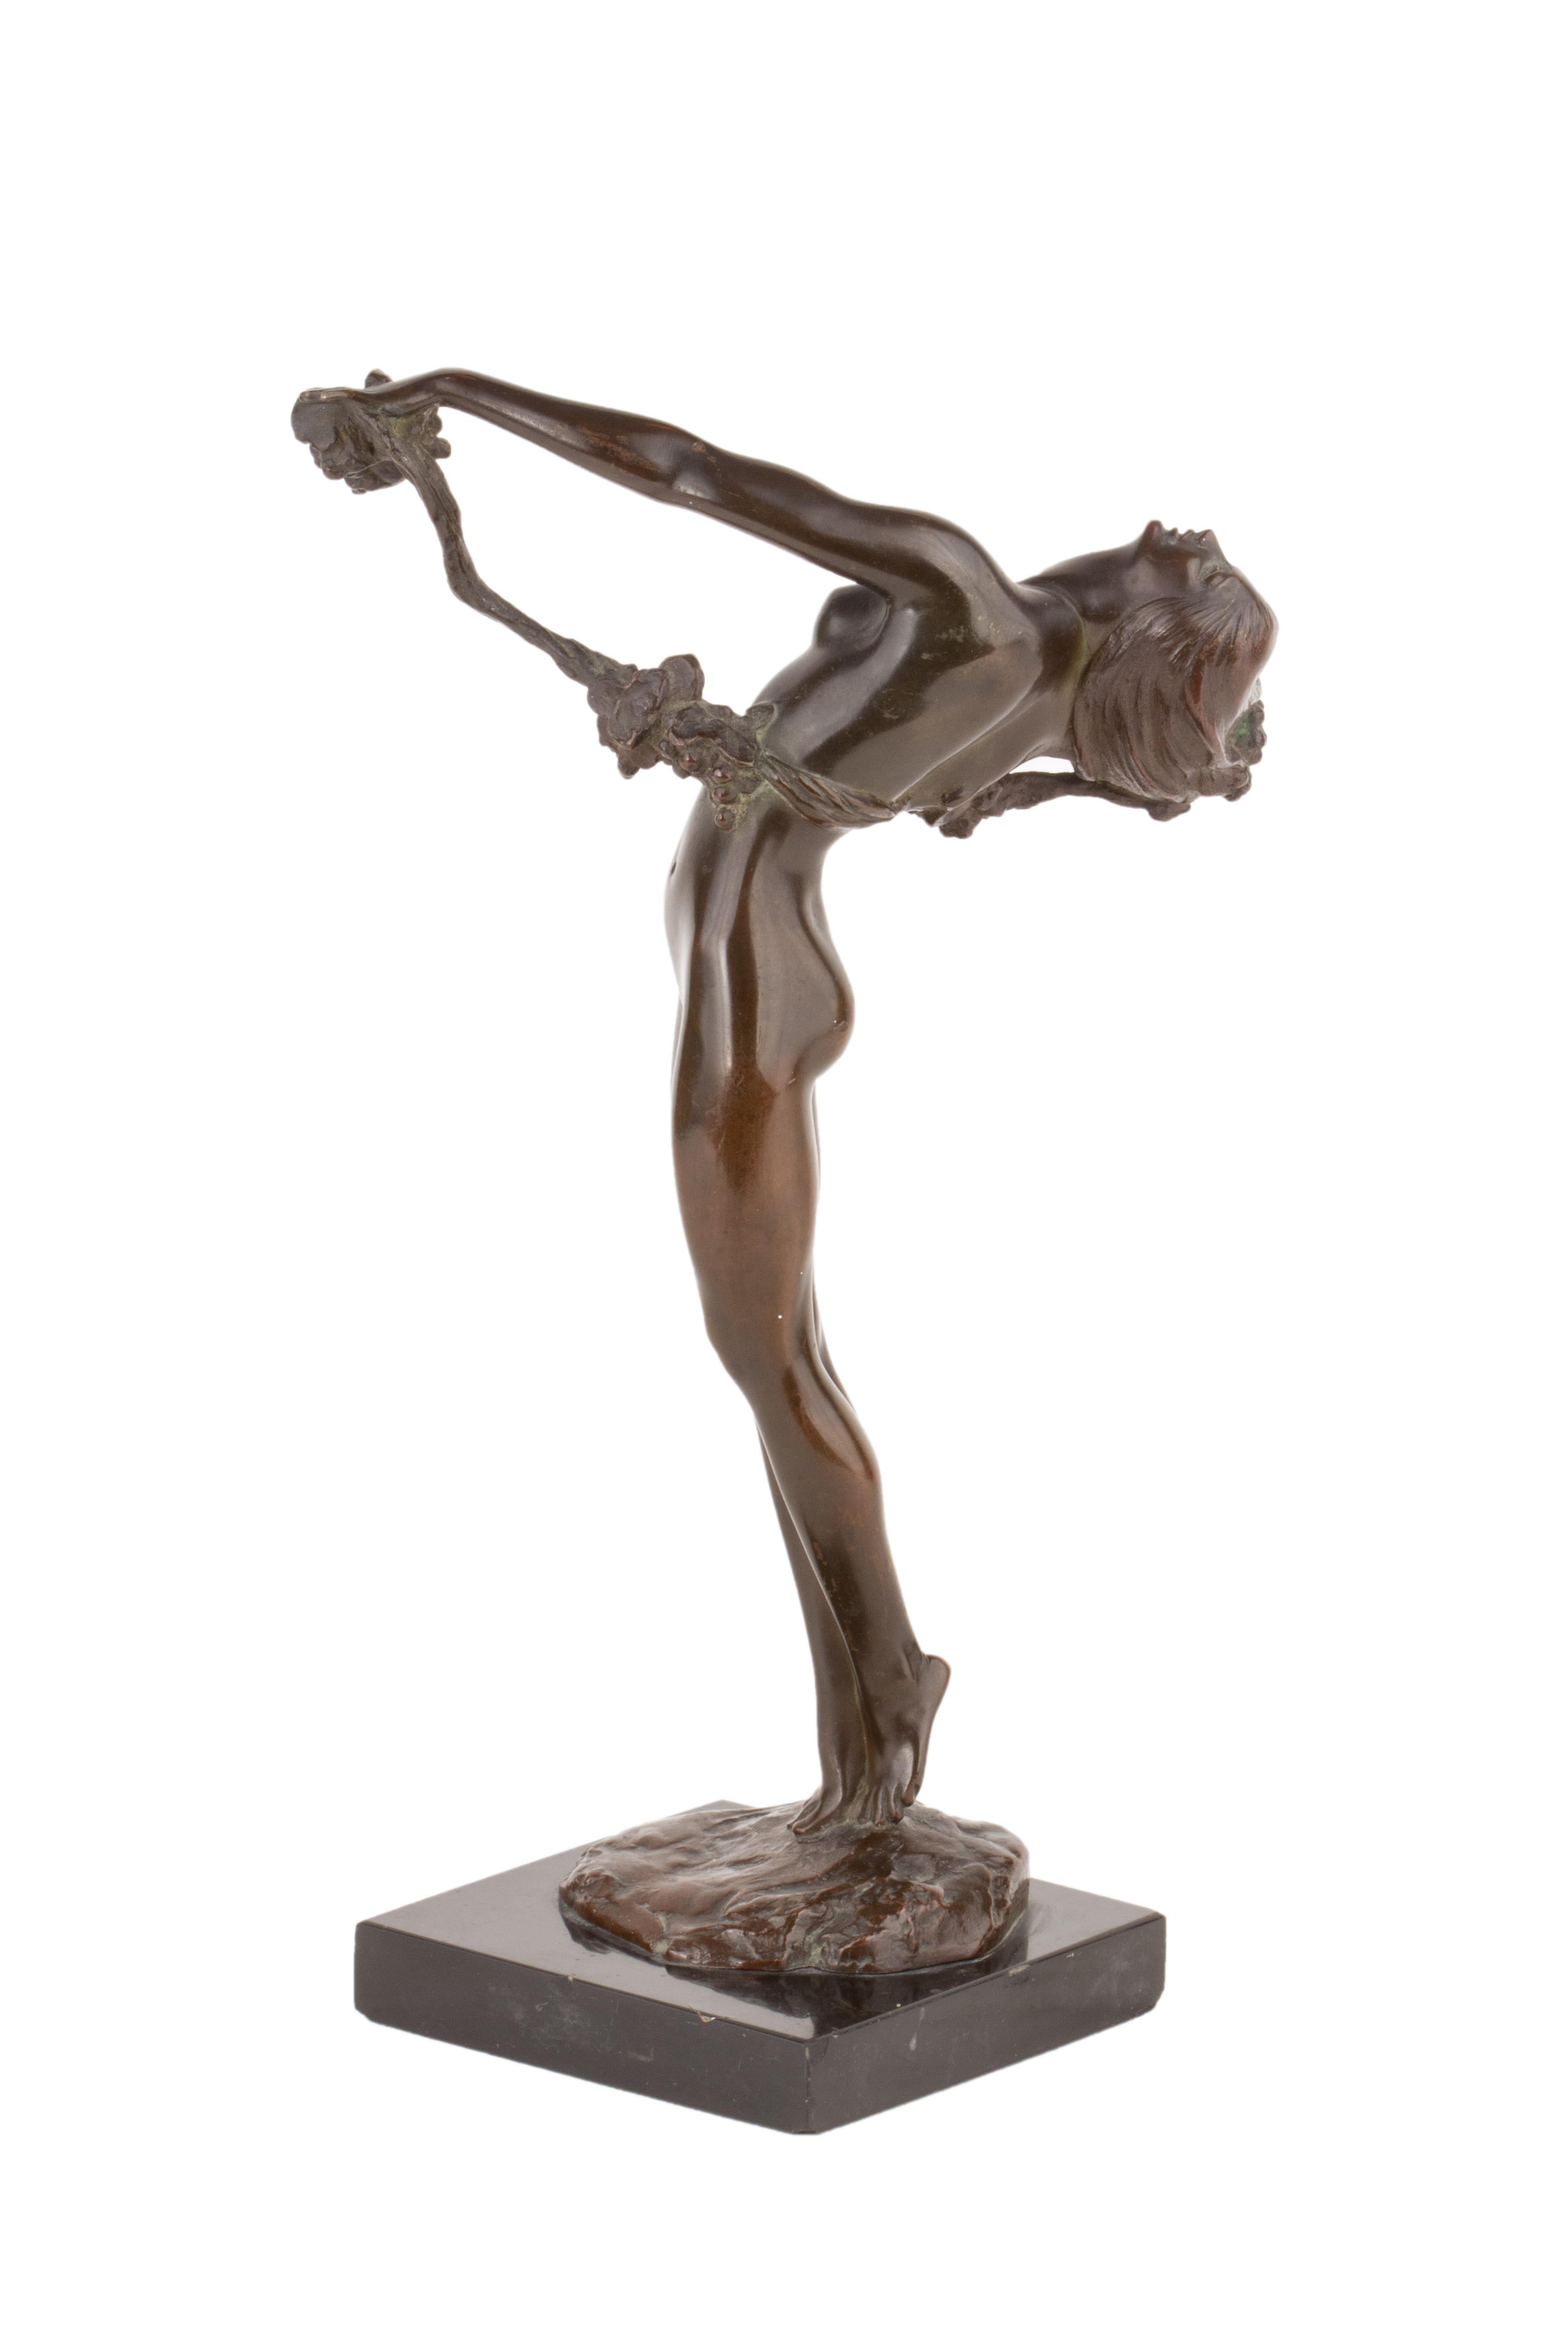 the vine by harriet frishmuth bronze sculpture 1921 1 of 396